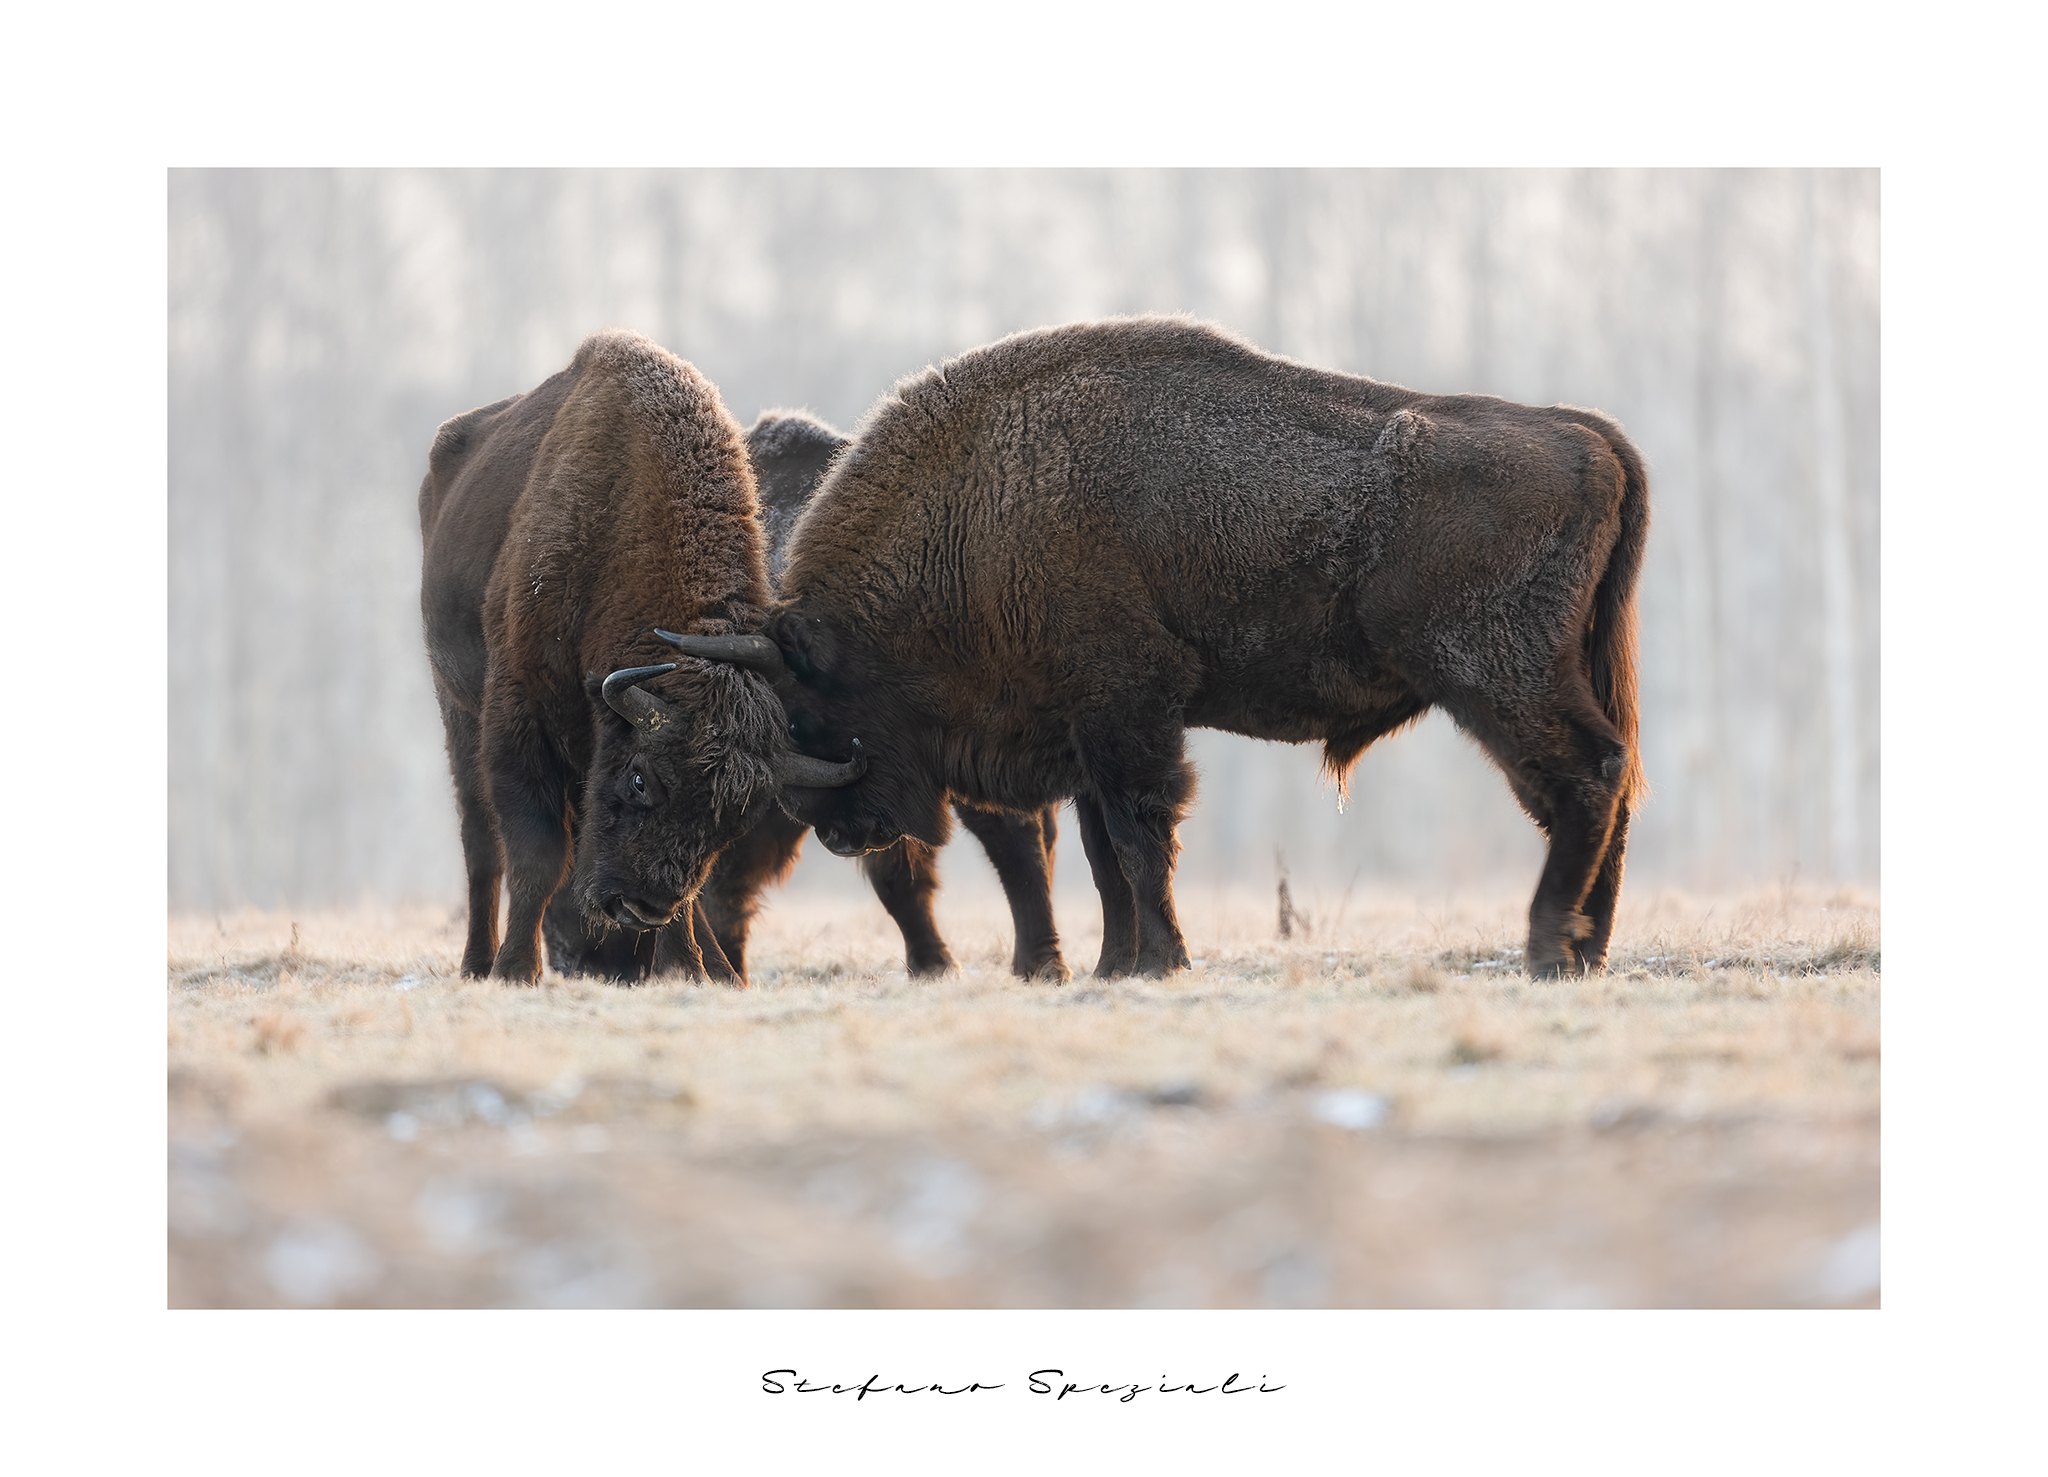 European bison - Bison bonasus...